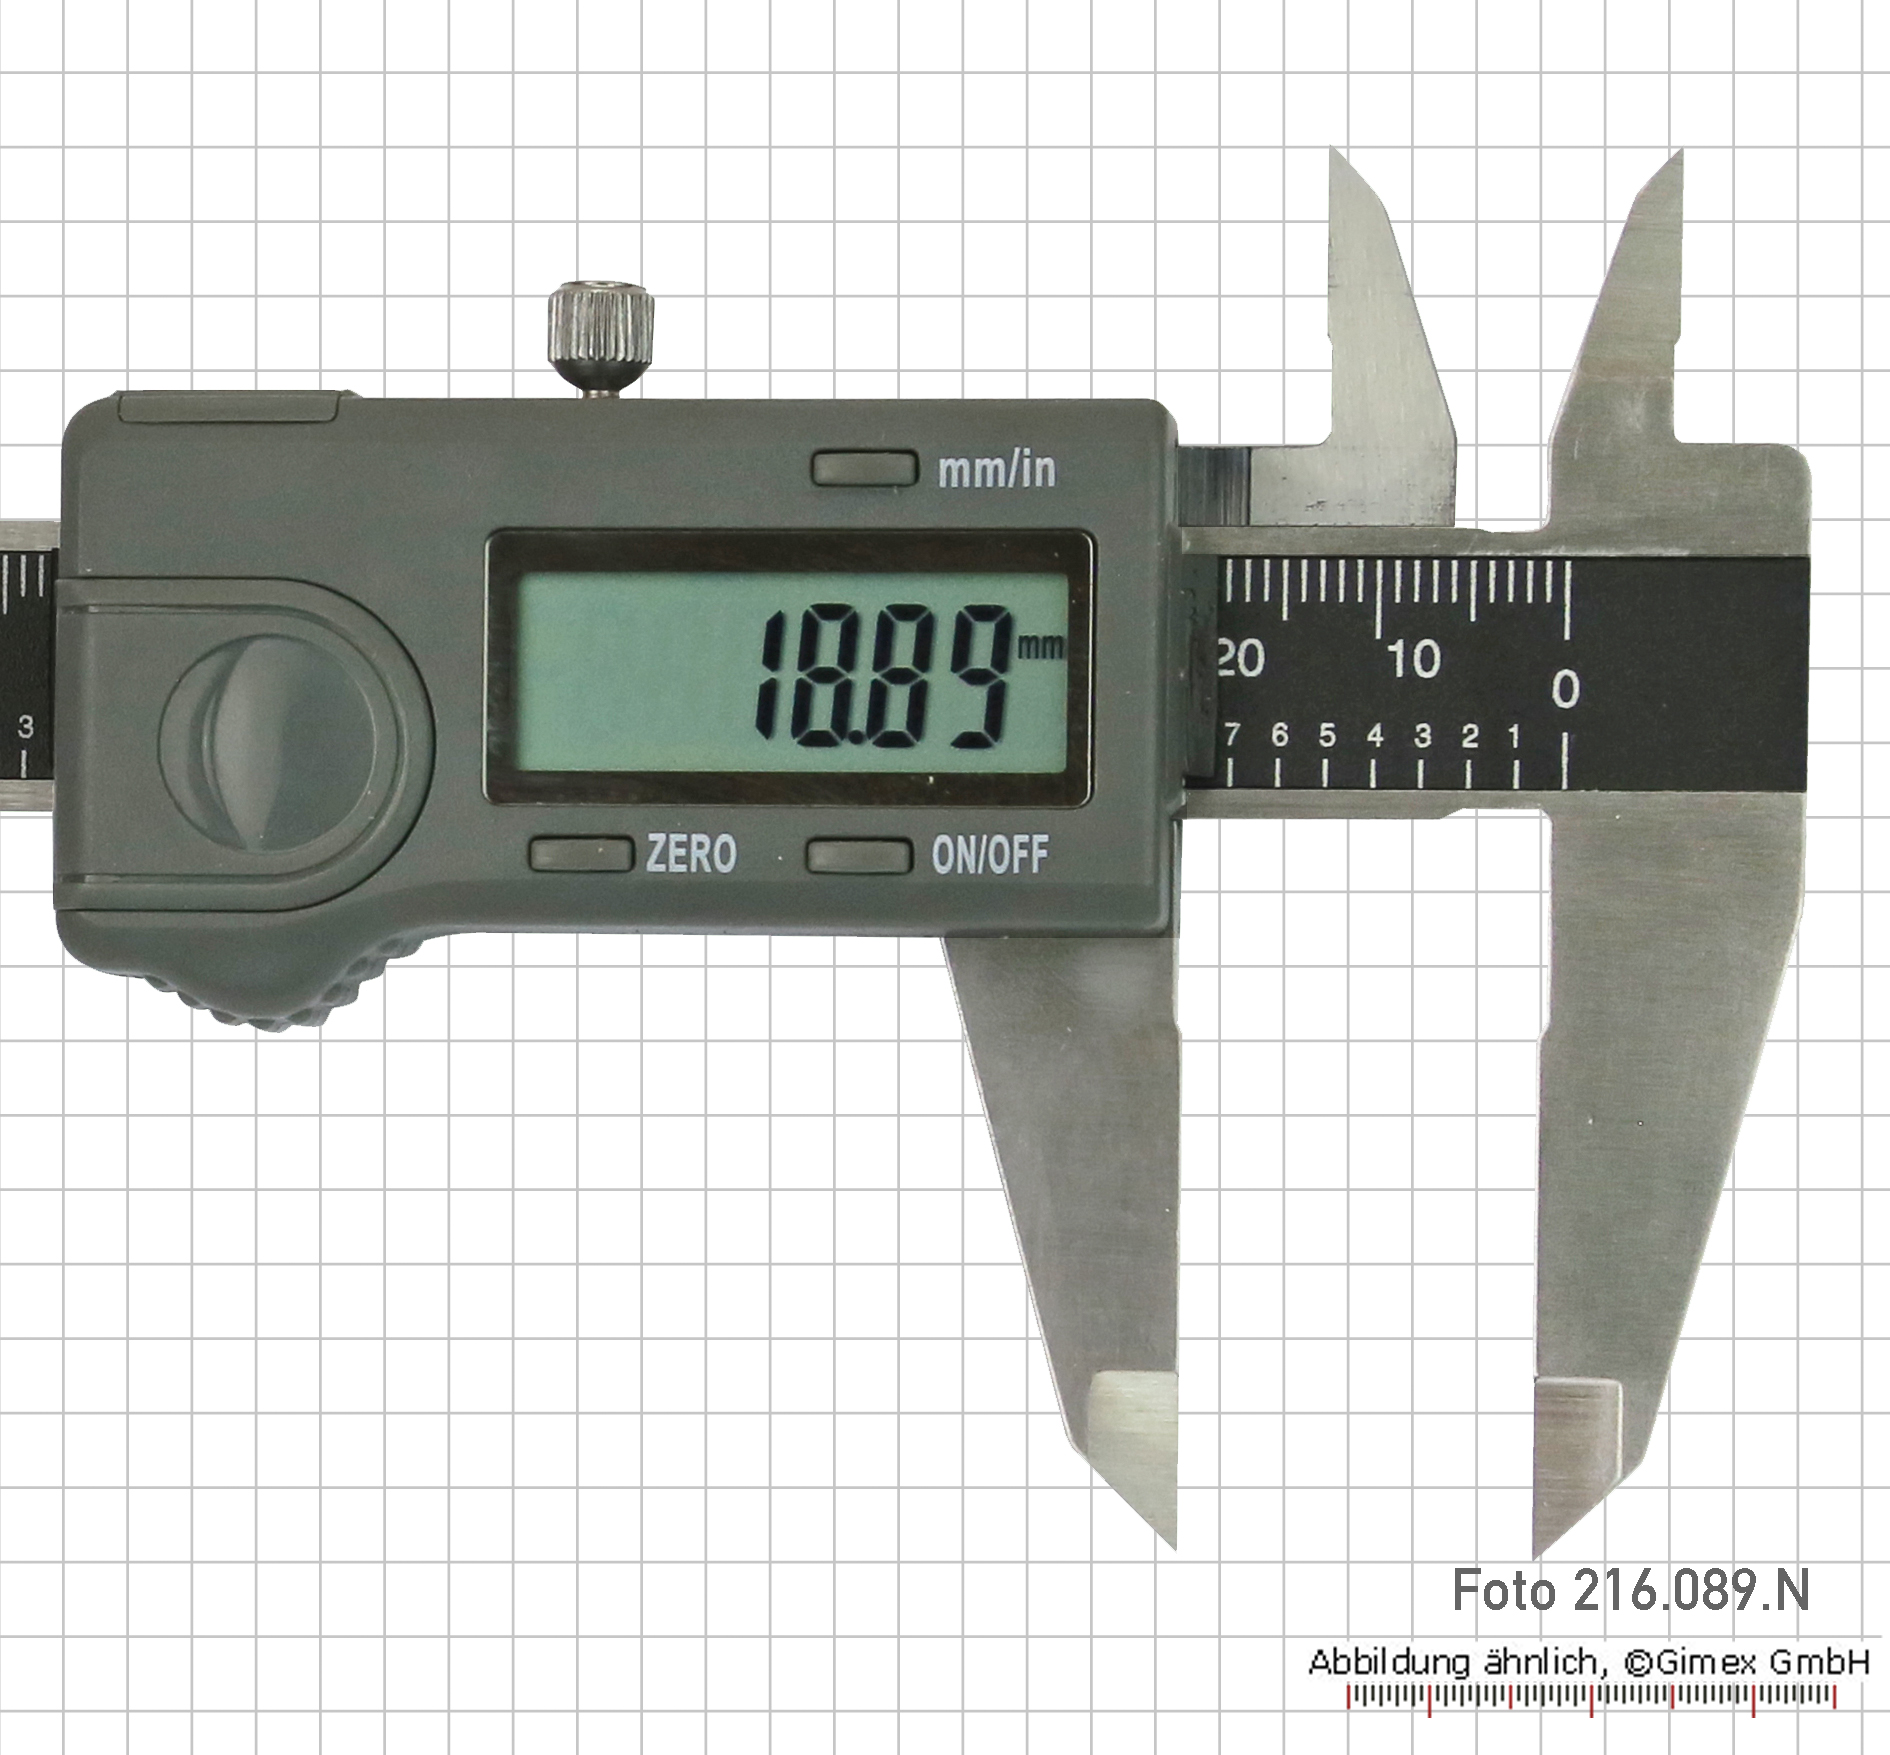 Simply buy Digital caliper for left-hand use 150 mm